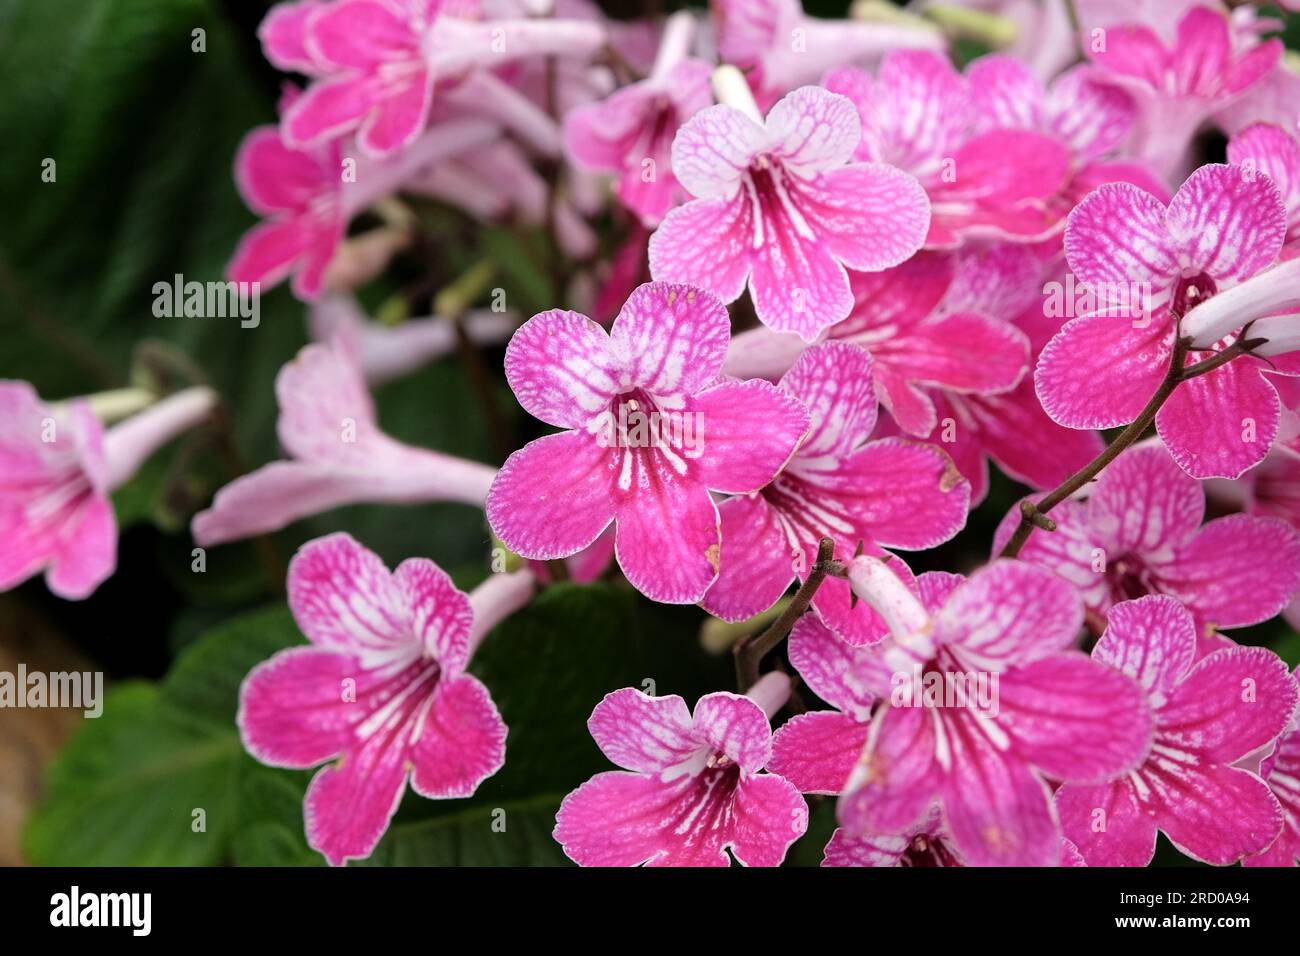 Streptocarpus, Cape primrose, 'Celebration' in flower. Stock Photo